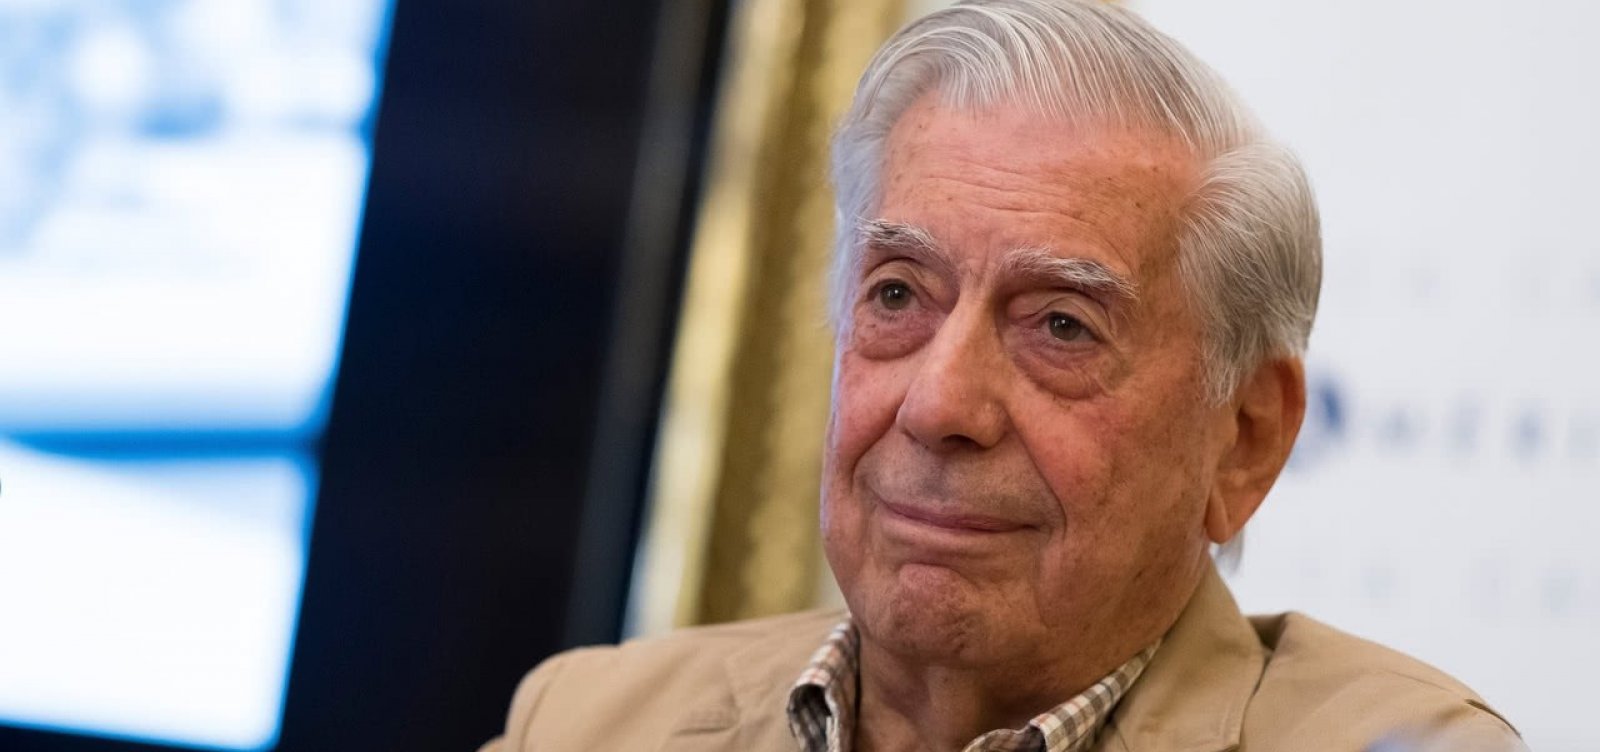 Mario Vargas Llosa é internado após sofrer queda